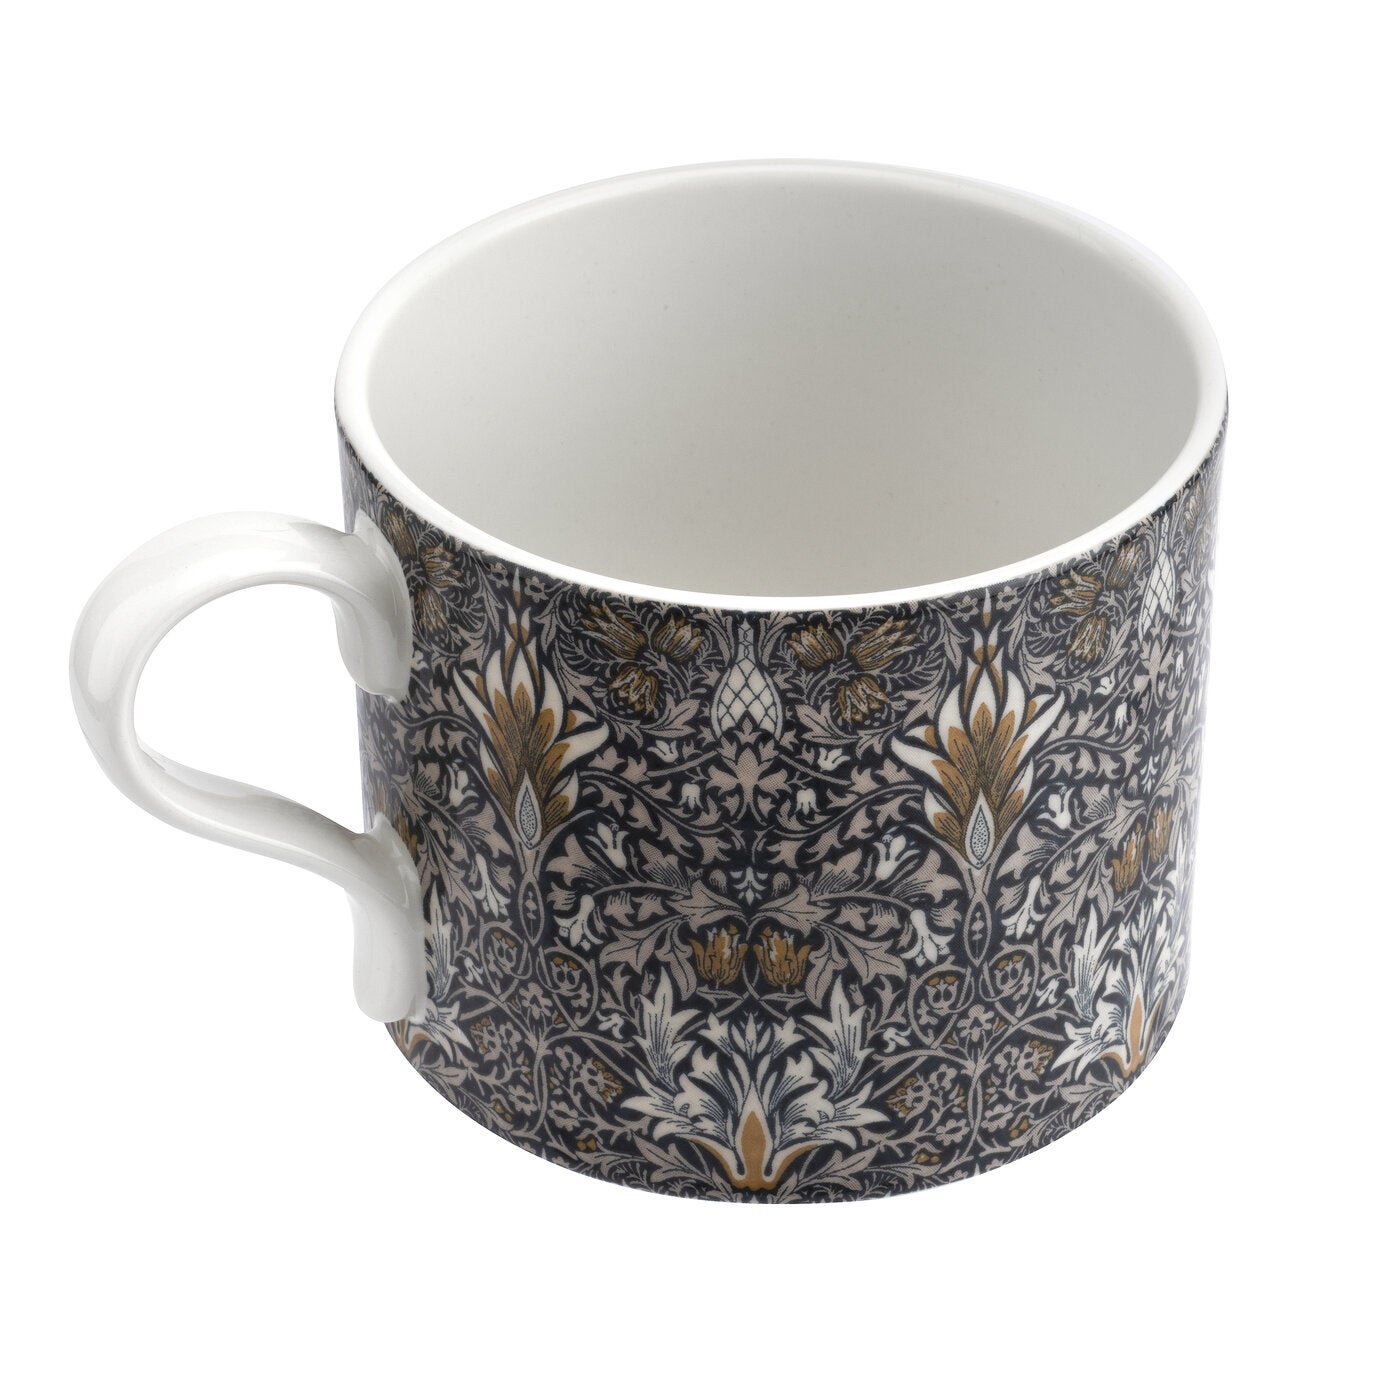 Spode William Morris Snakeshead Mugs, Set of 2 | Buy Mugs & Coffee Cups ...